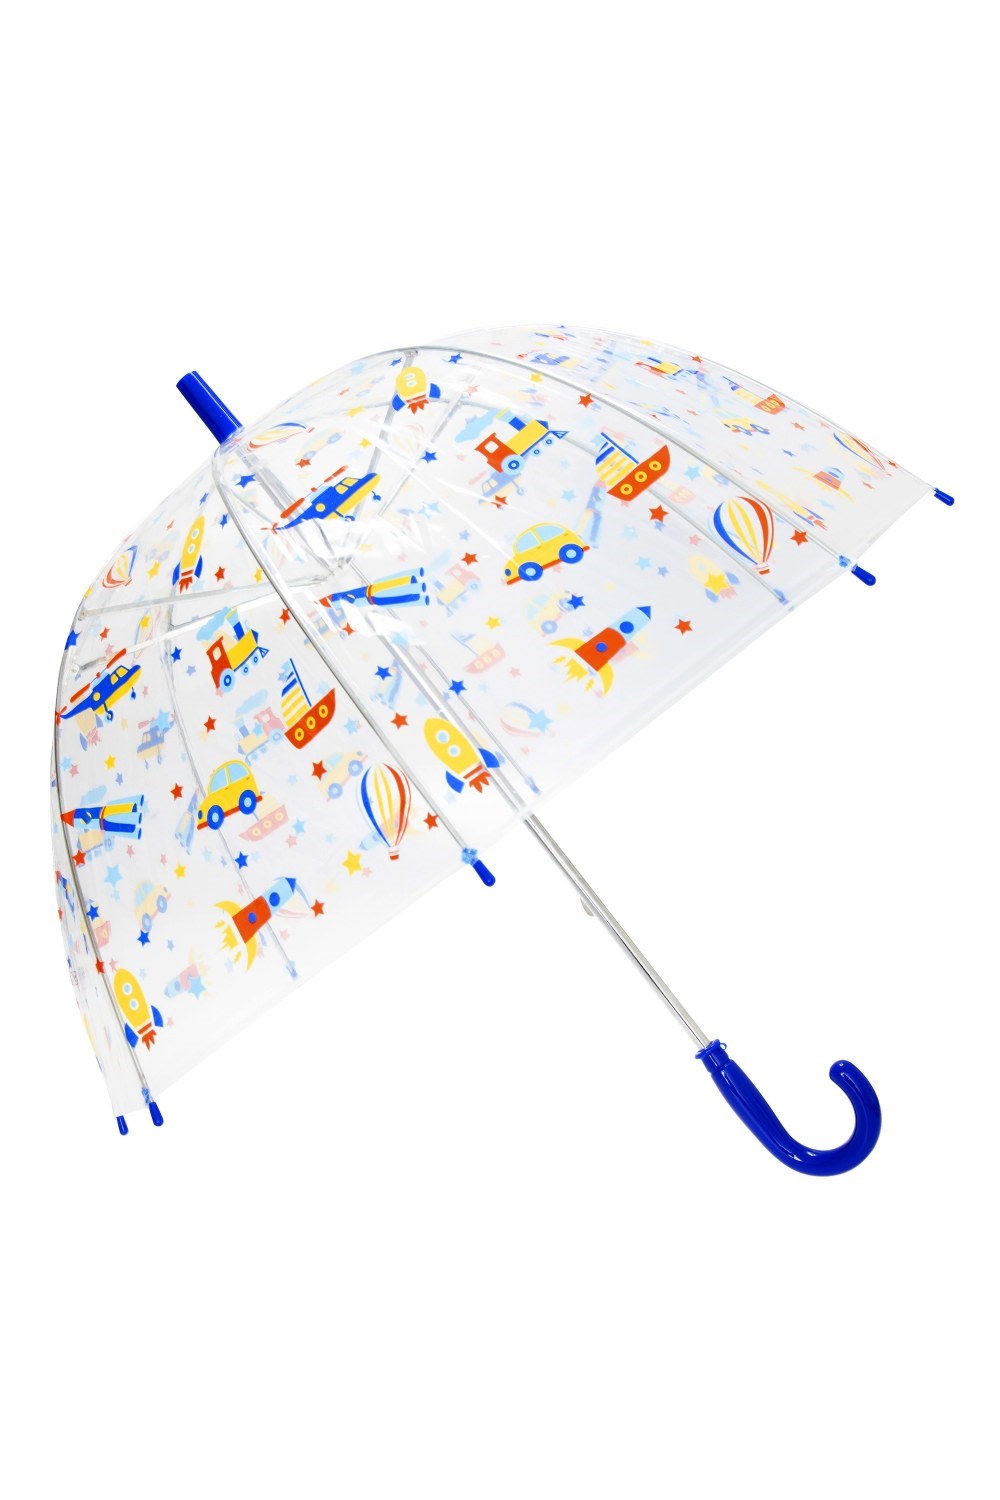 Kids CarsandPlanes Umbrella -